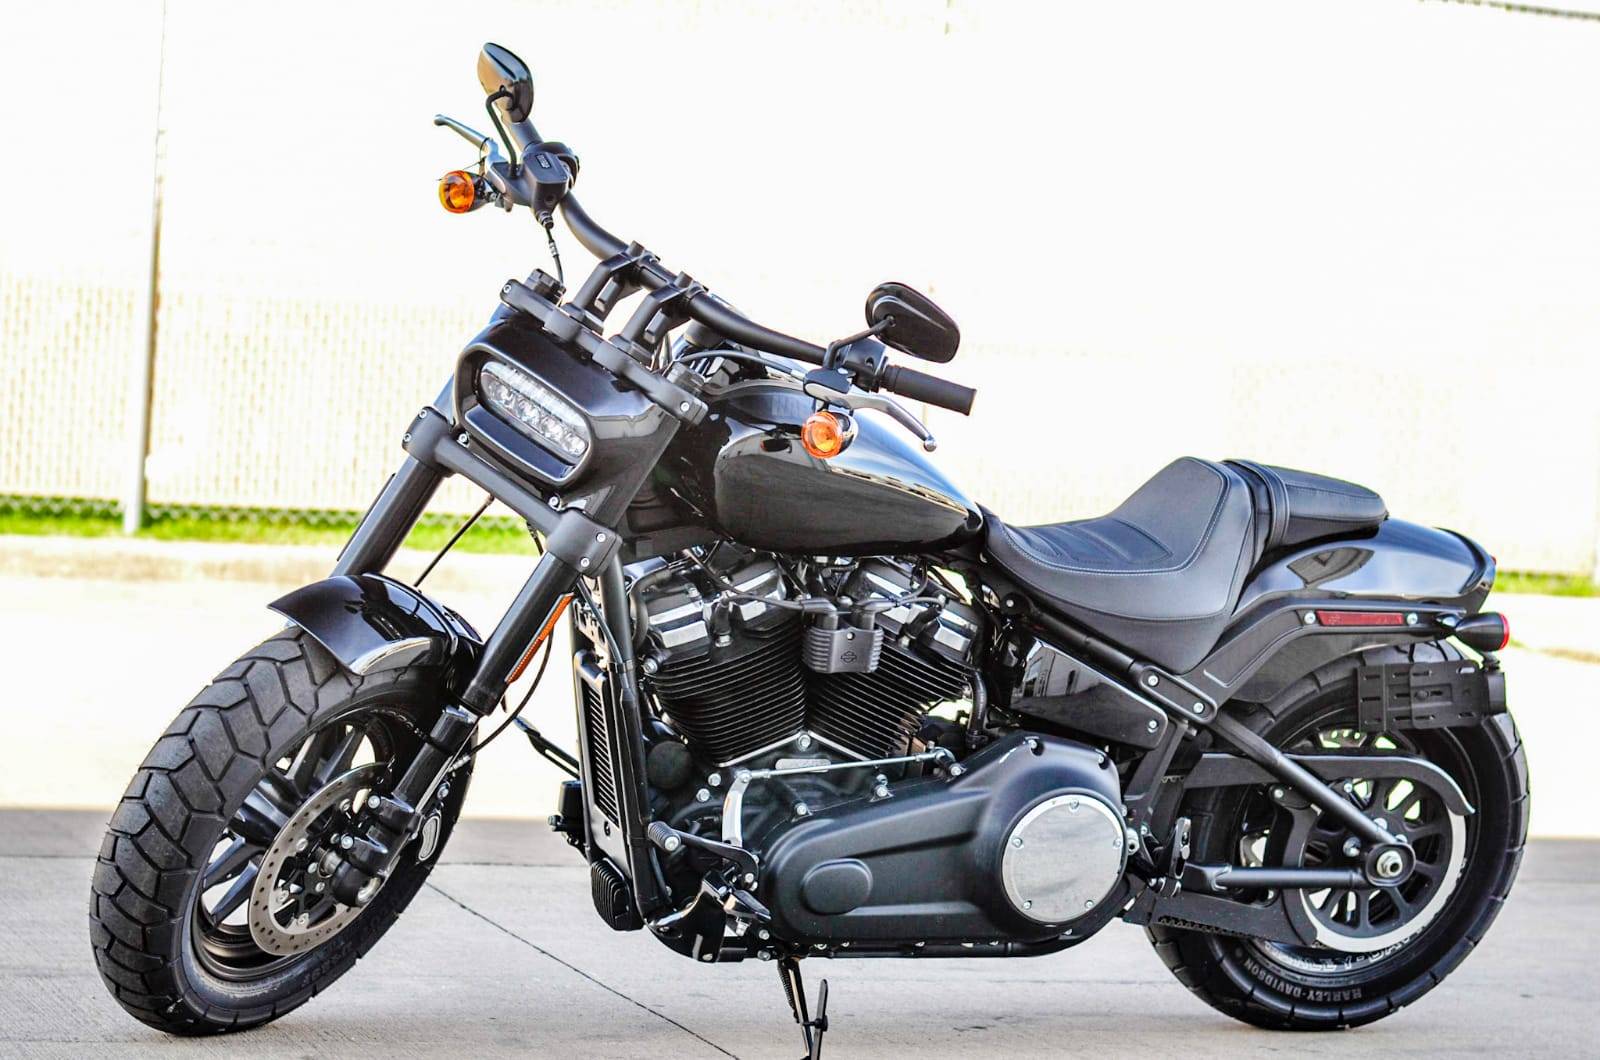 2018 Harley Davidson Fat Bob 107 For Sale Houston Tx 244669